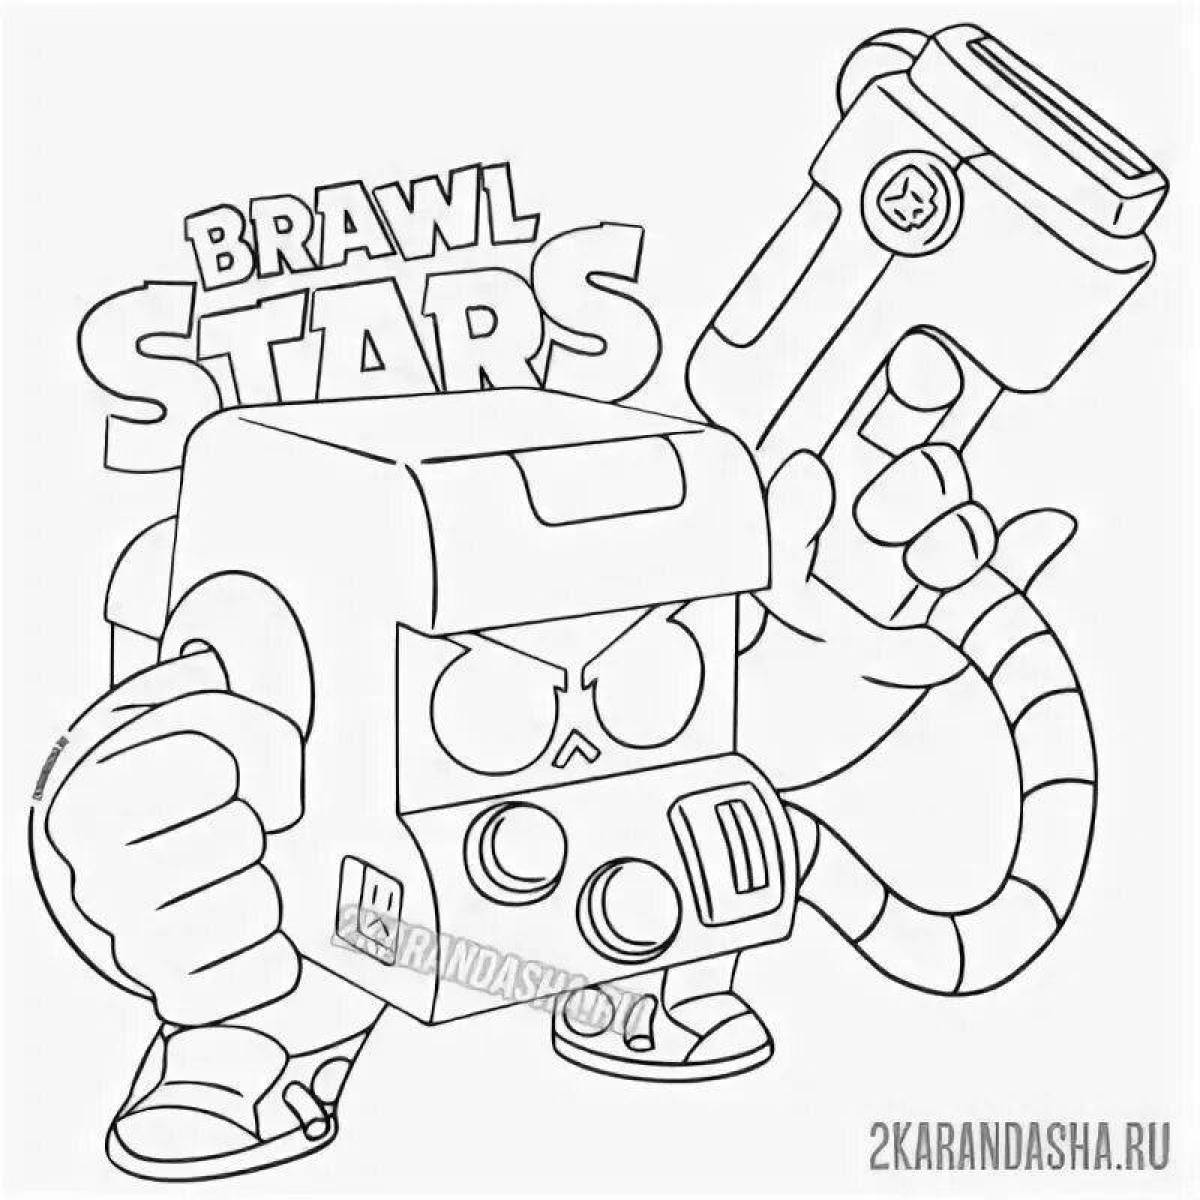 Чудесная раскраска из brawl stars 8 bit